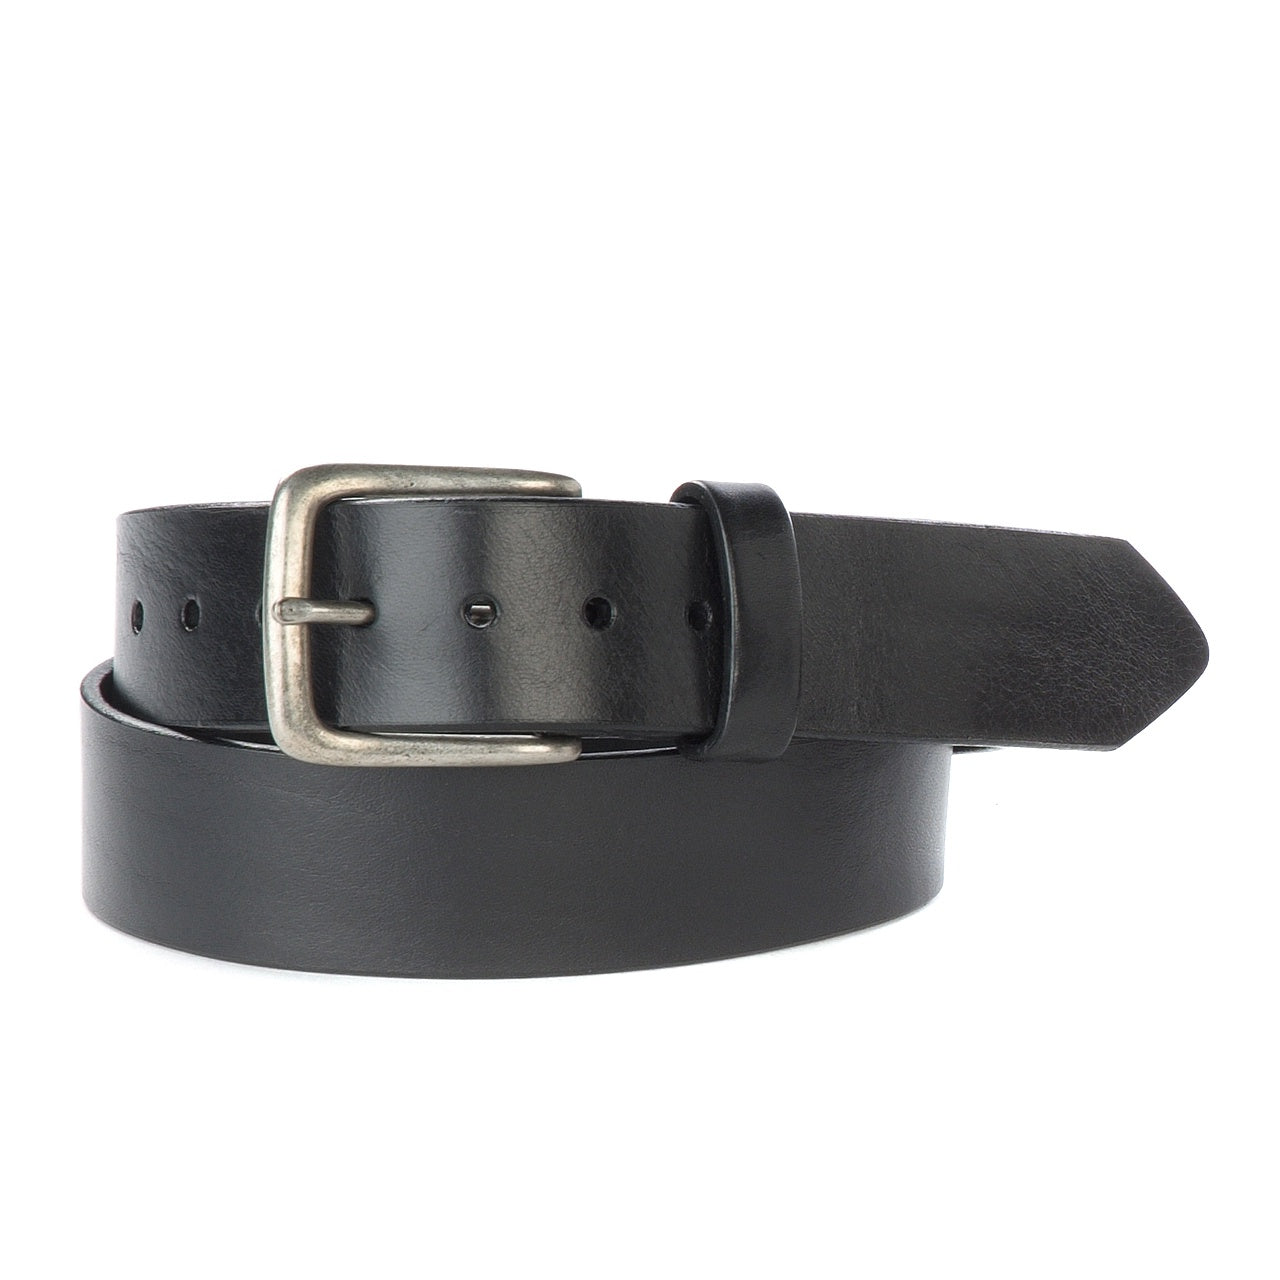 Brave Mens Duccio belt in black with silver buckle